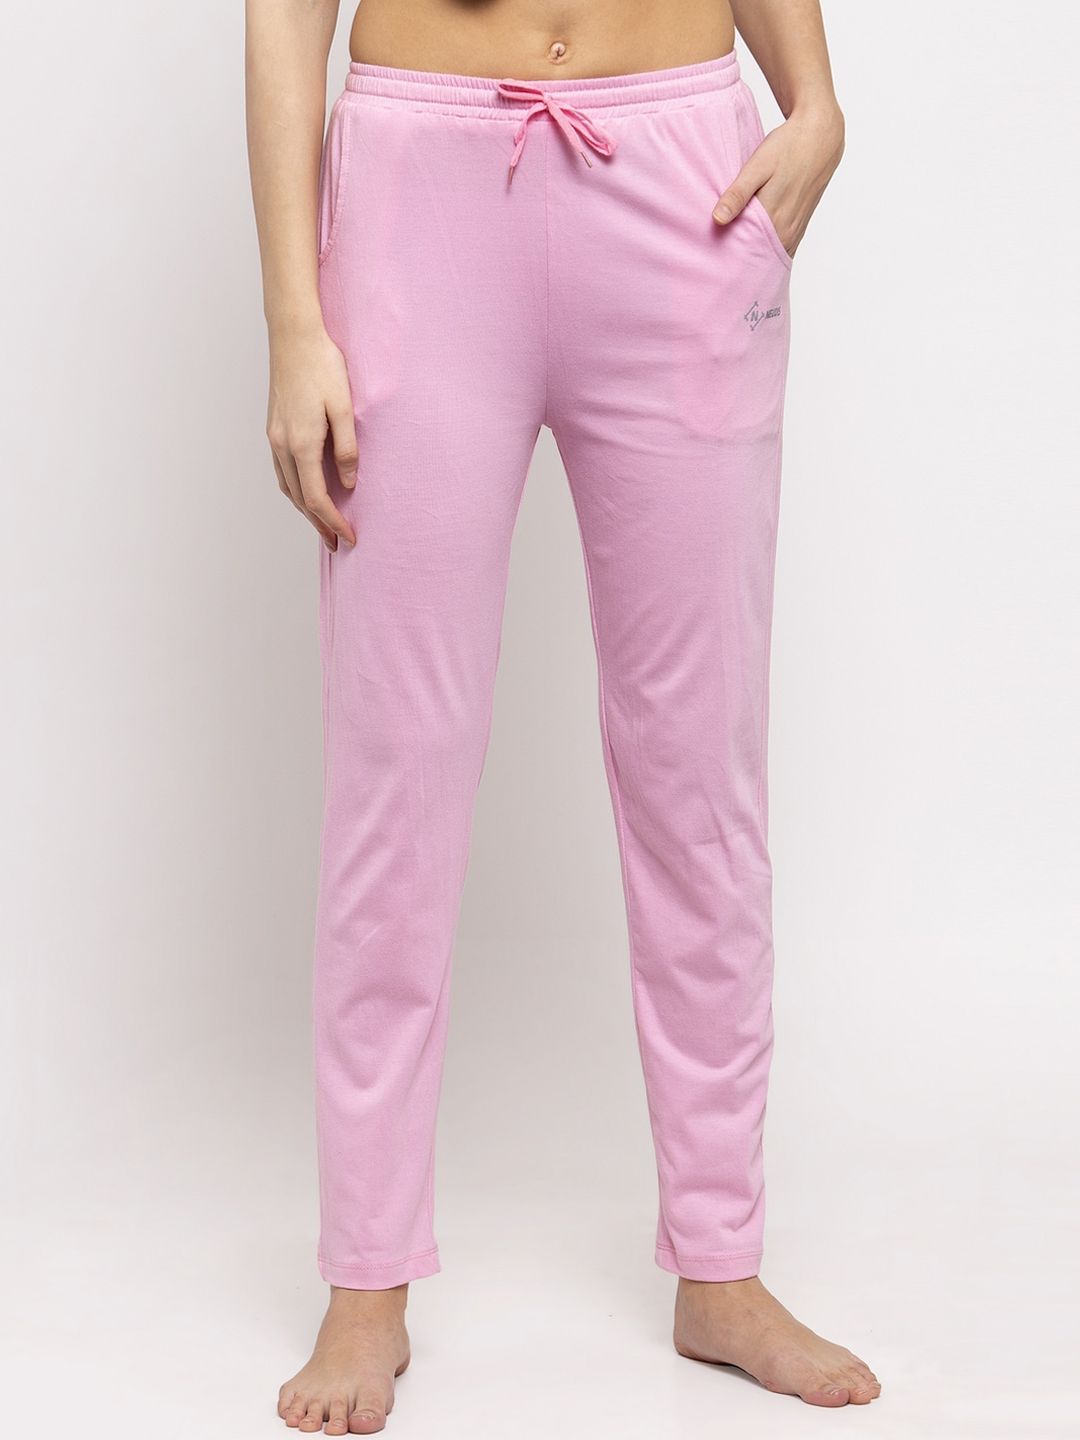 NEUDIS Women Light Pink Solid Cotton Lounge Pant Price in India